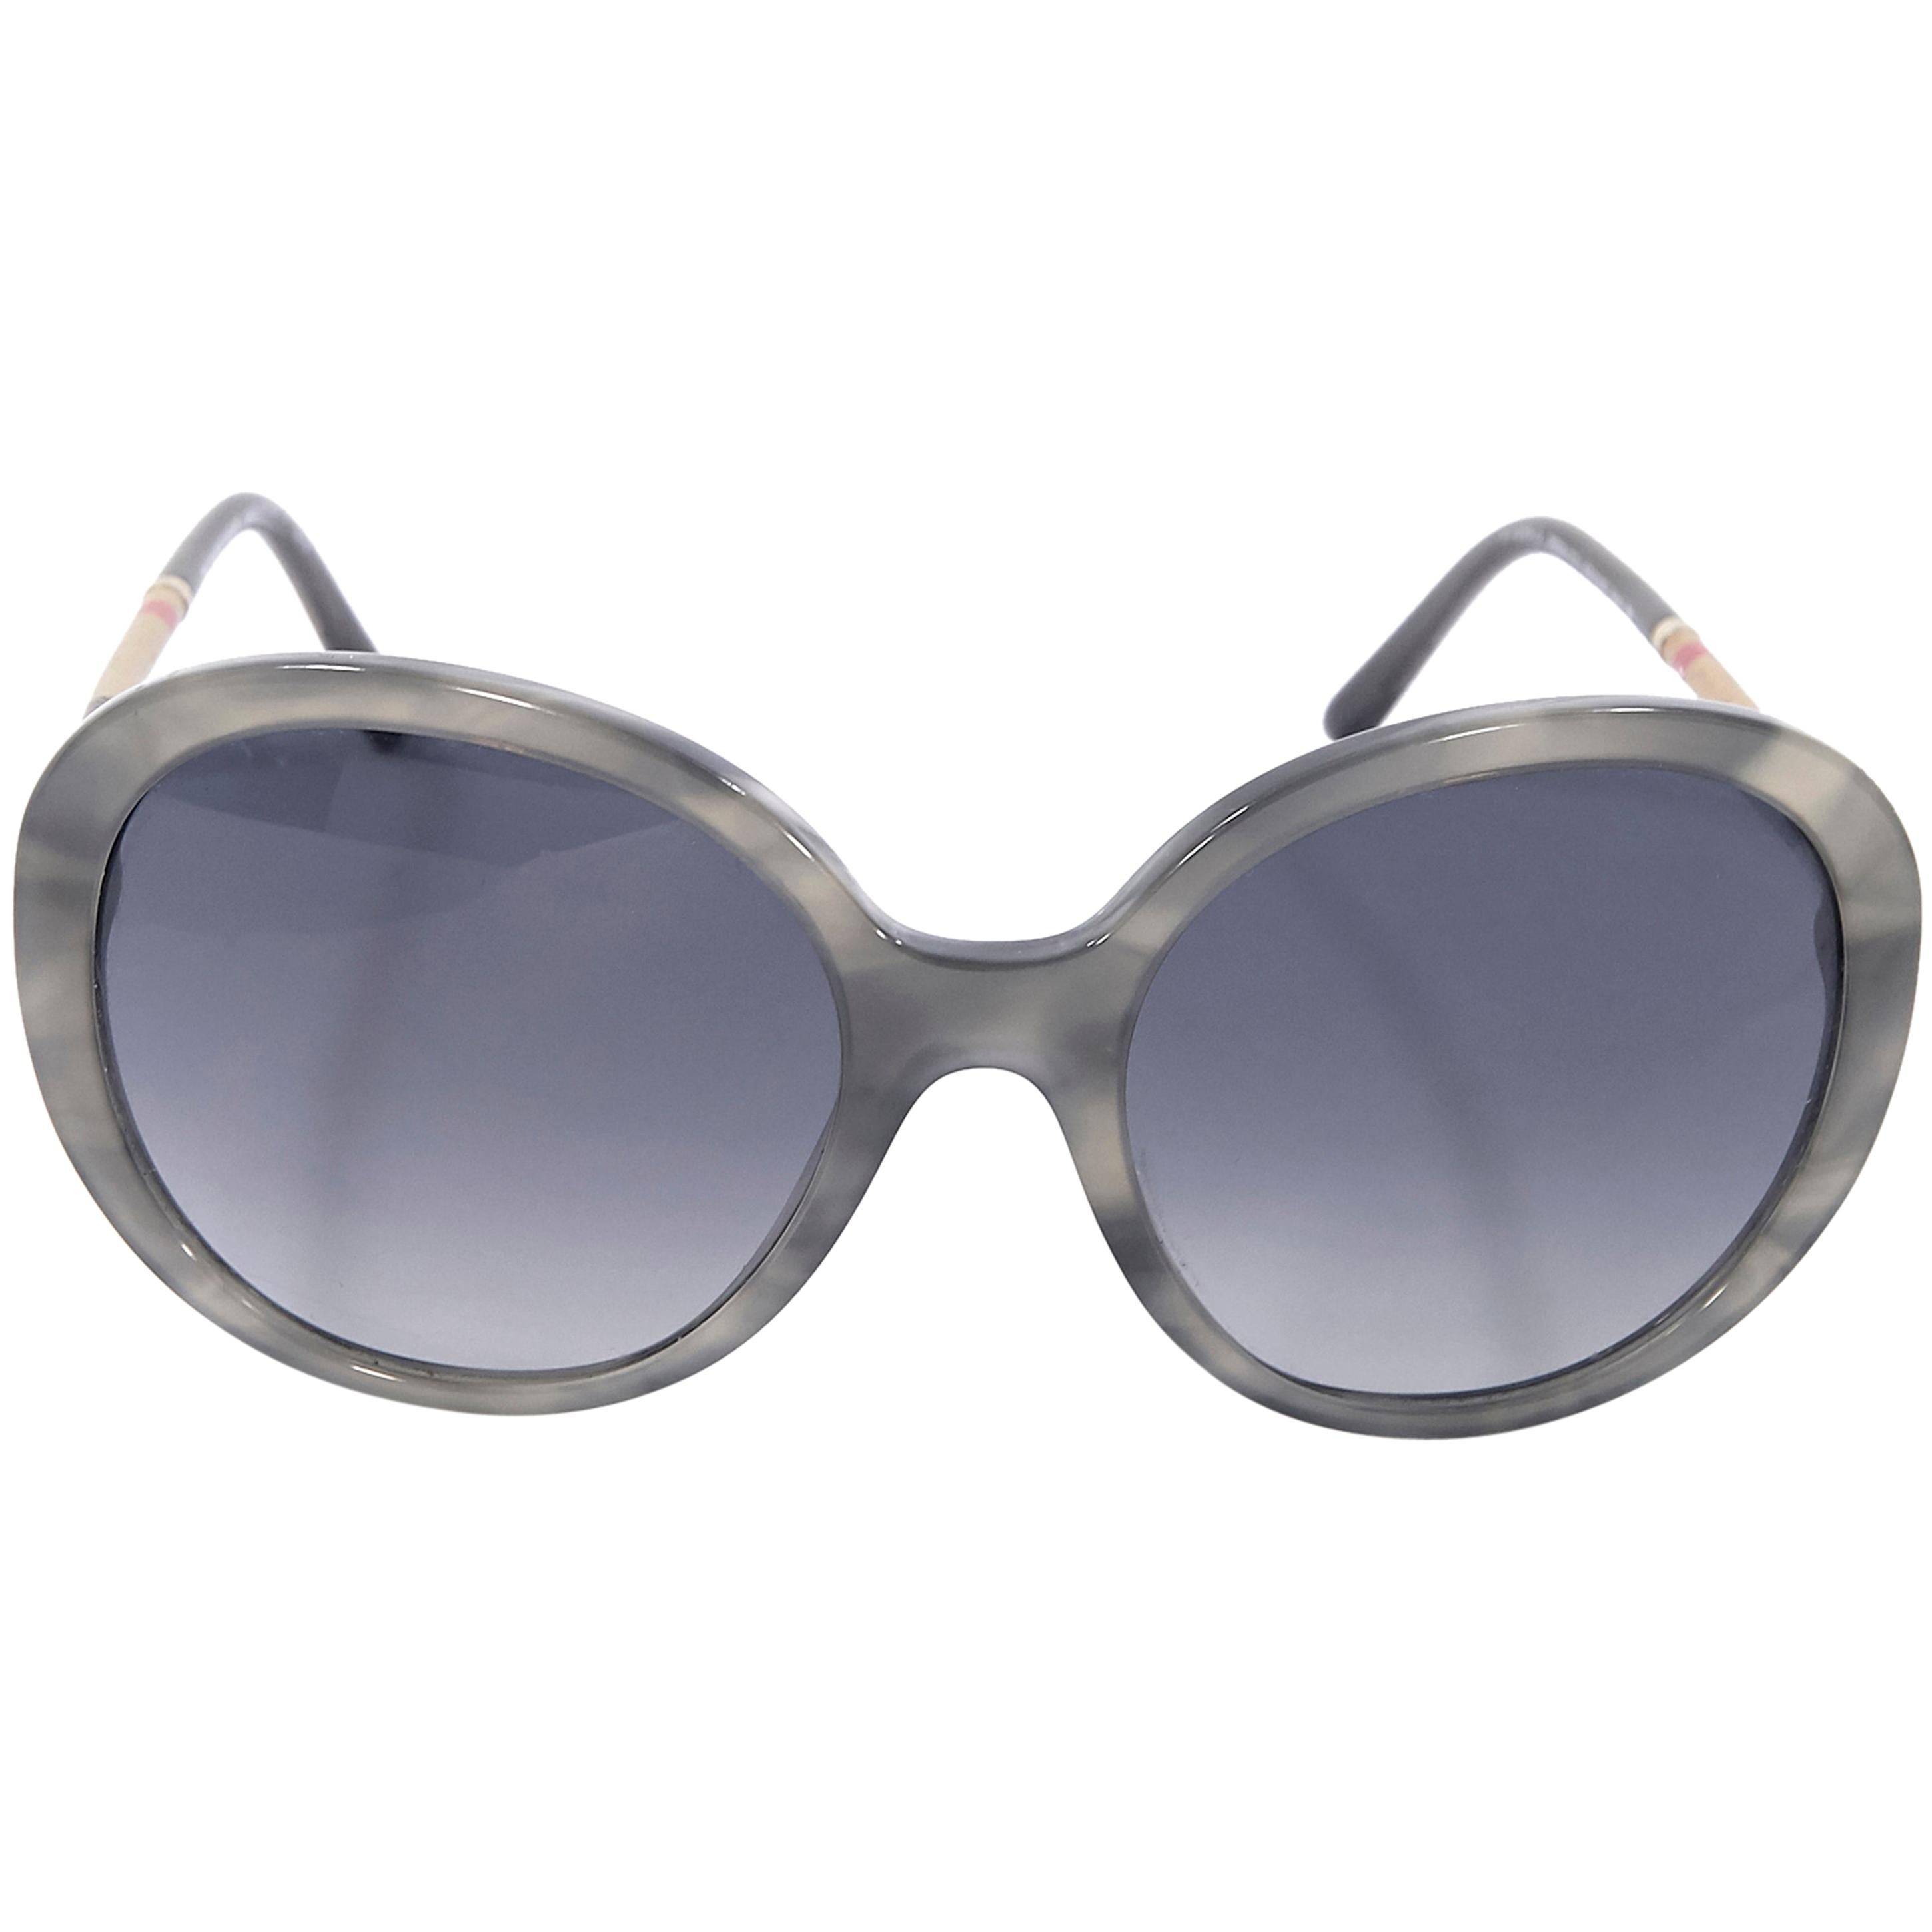 Grey Burberry Tortoise Shell Round Sunglasses